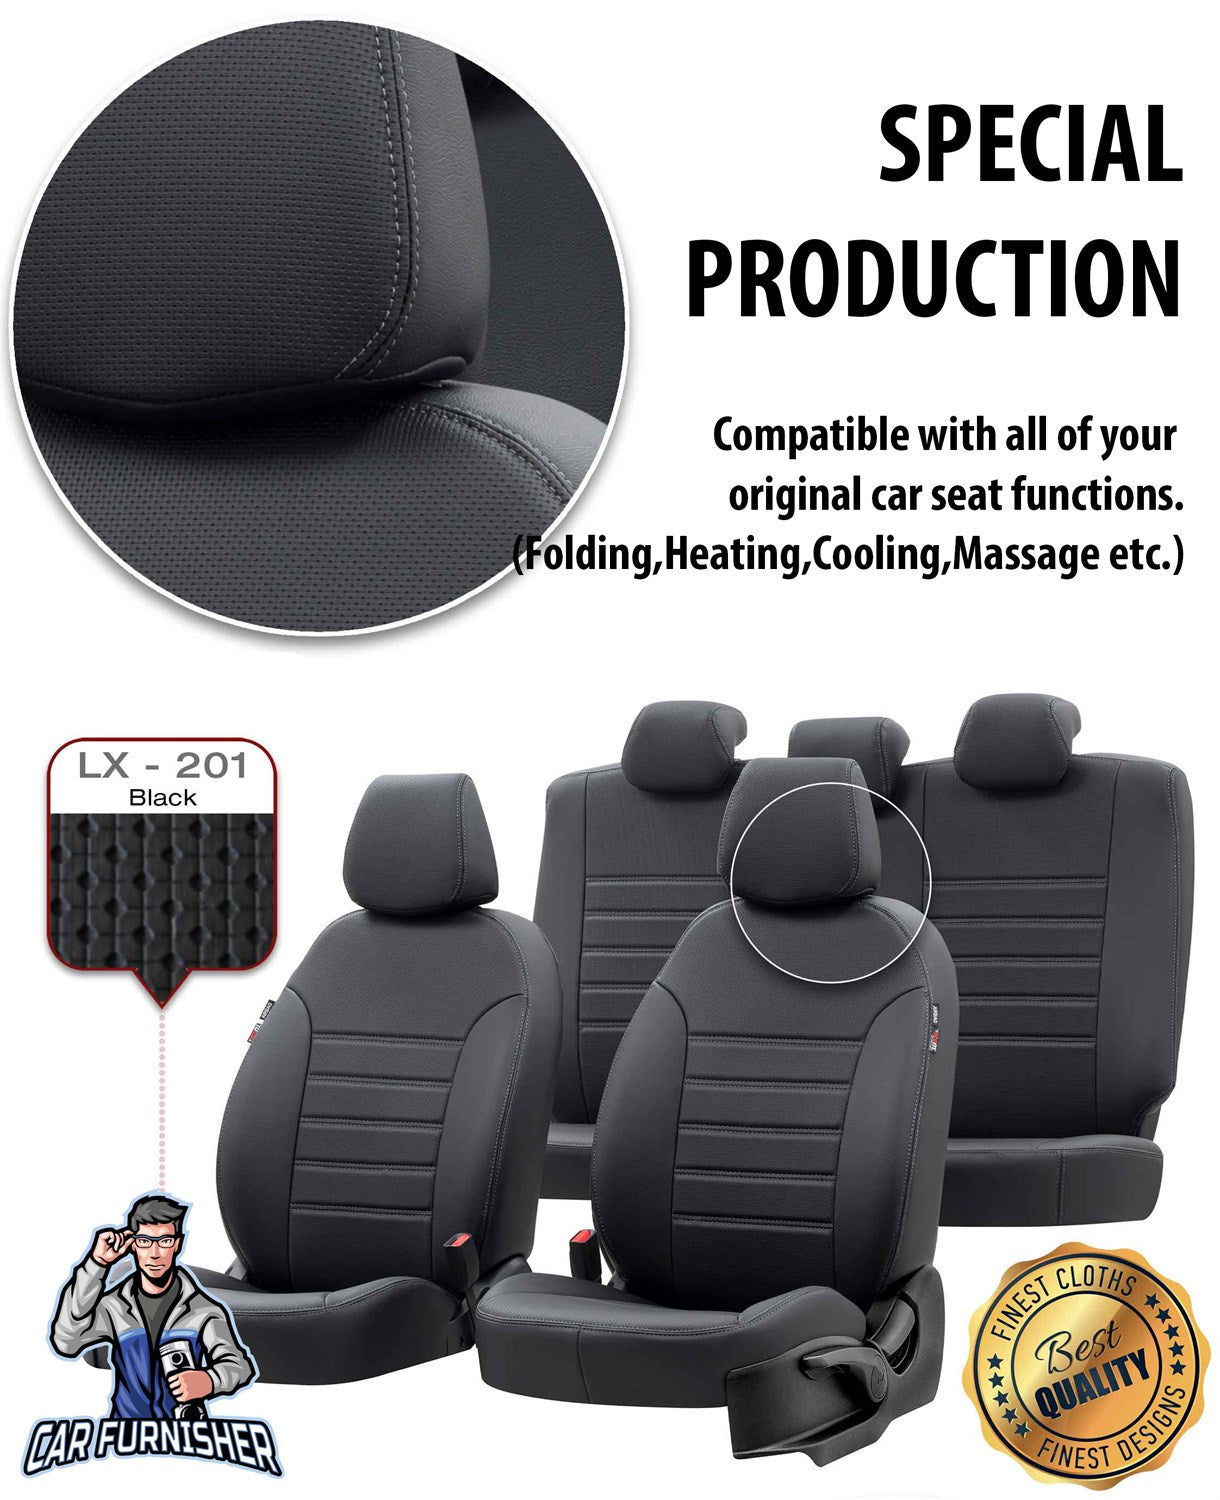 Skoda Octavia Seat Covers New York Leather Design Beige Leather